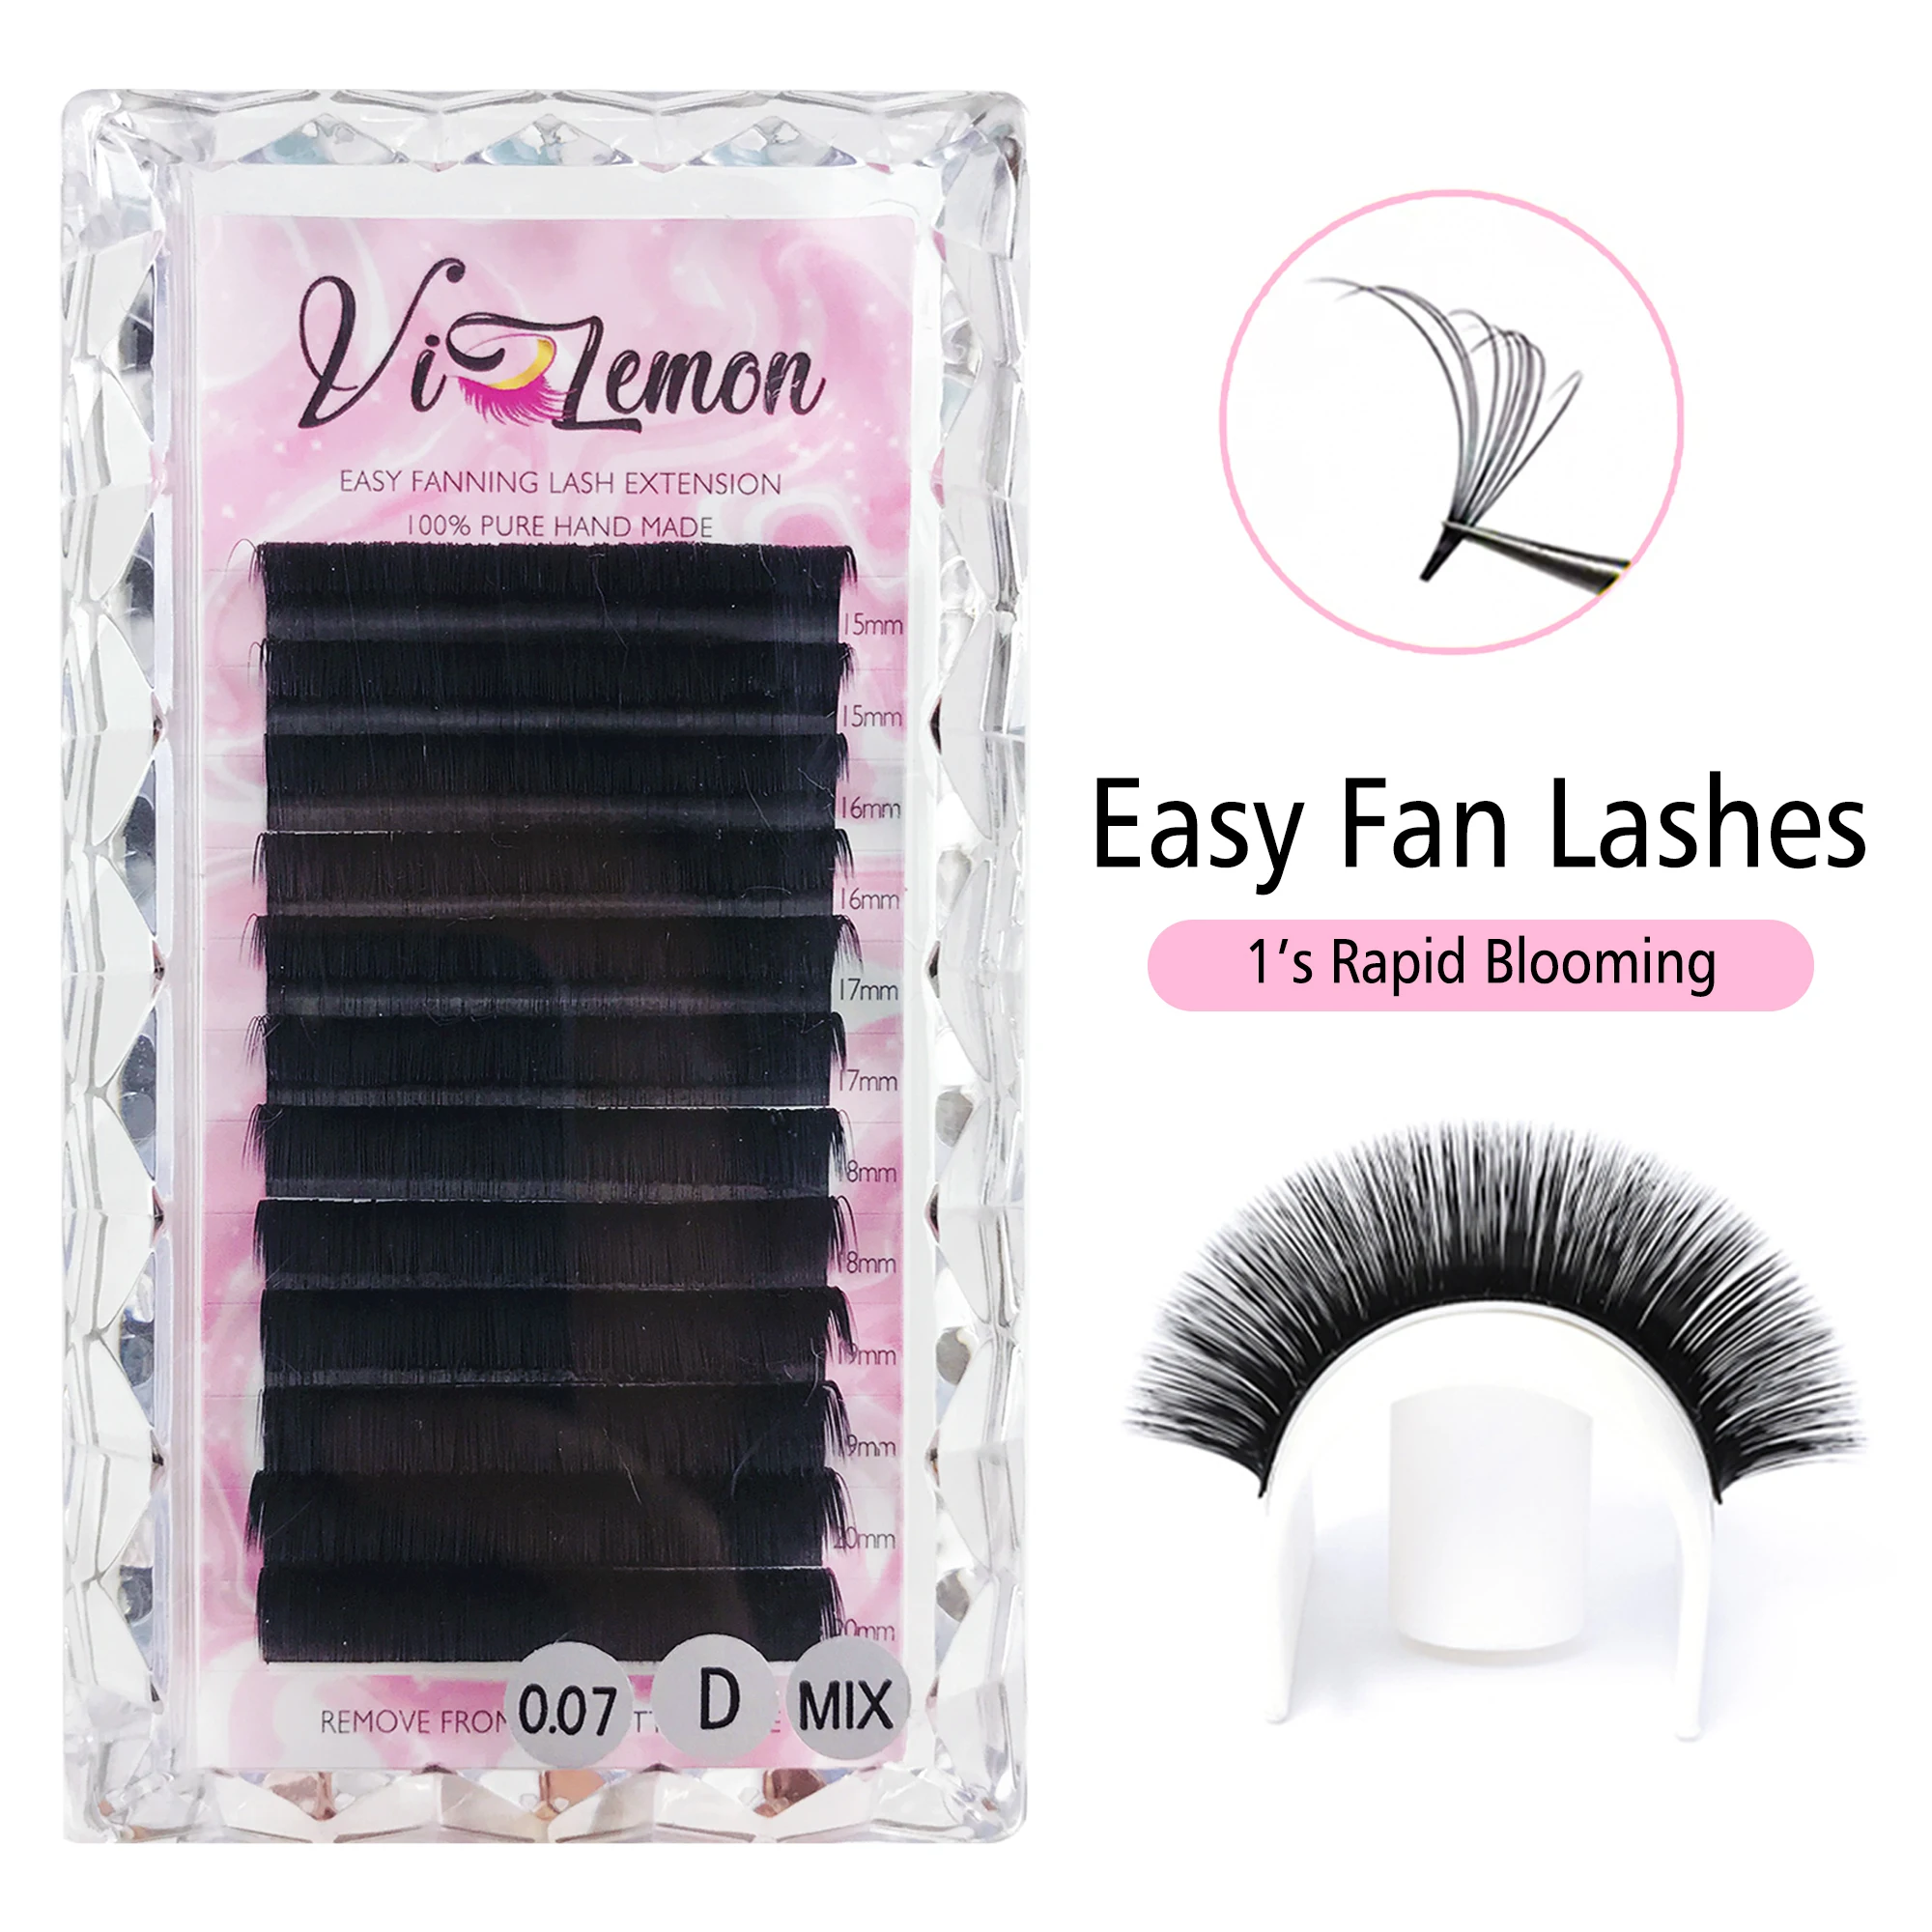 

ViLemon Easy Fan Lashes Eyelash Extension Faux Mink Auto Flowering Rapid Blooming Fans Individual Eyelash Extension Easy Fanning